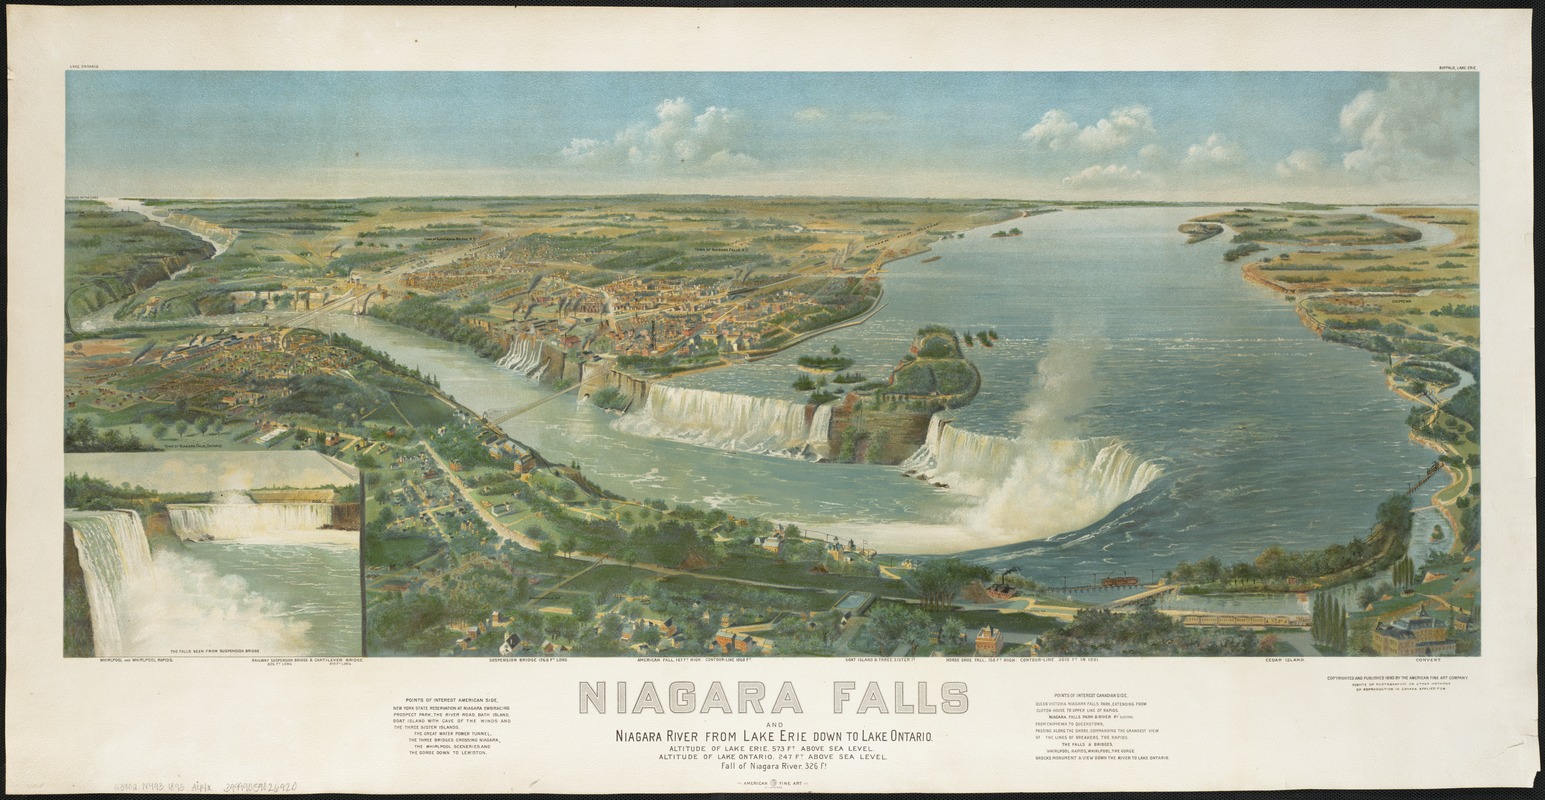 Niagara Falls and Niagara River from Lake Erie down to Lake Ontario